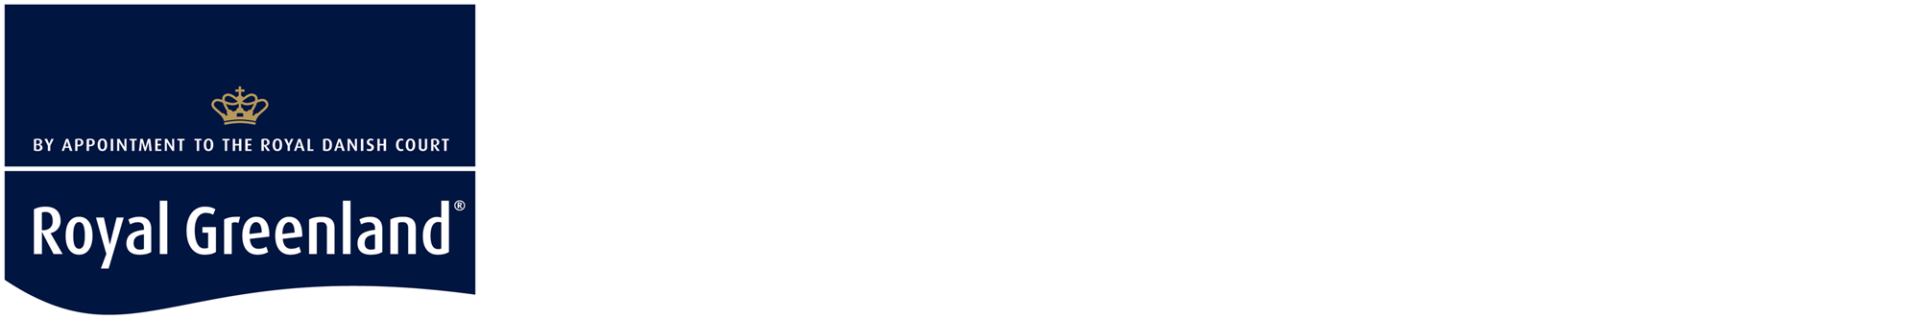 Royal Greenland logotype